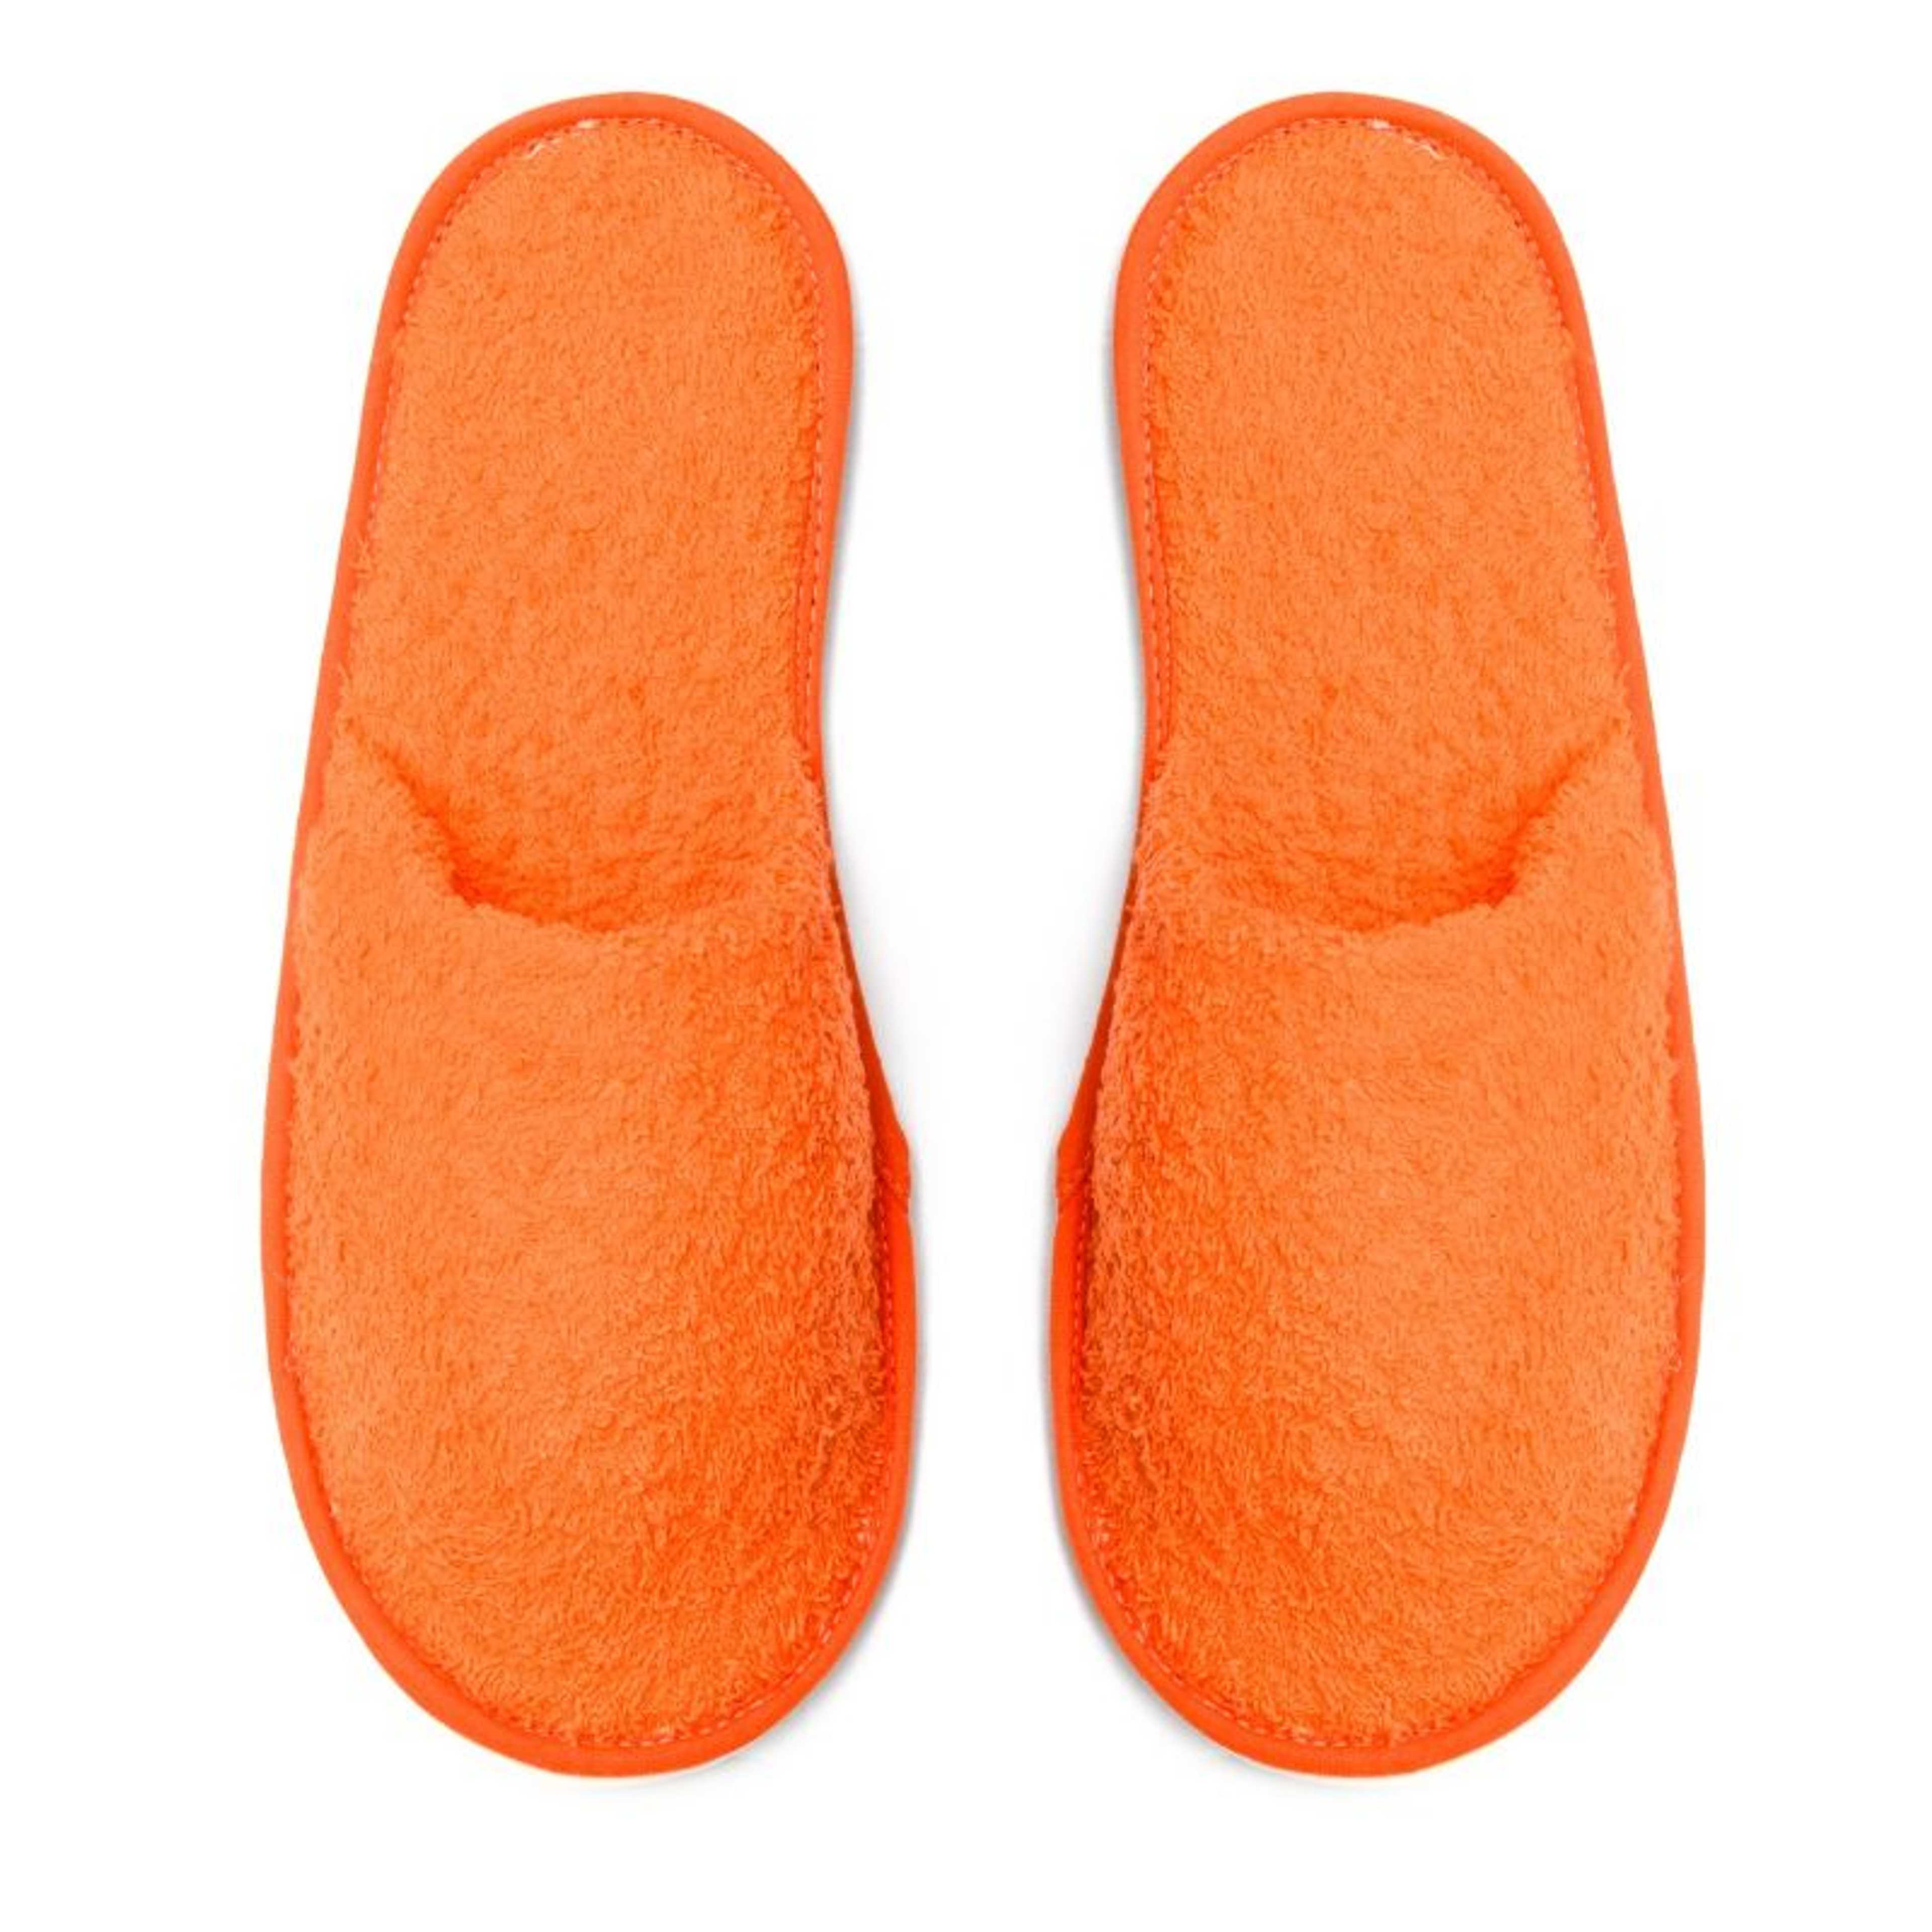 Sunny Orange Slippers